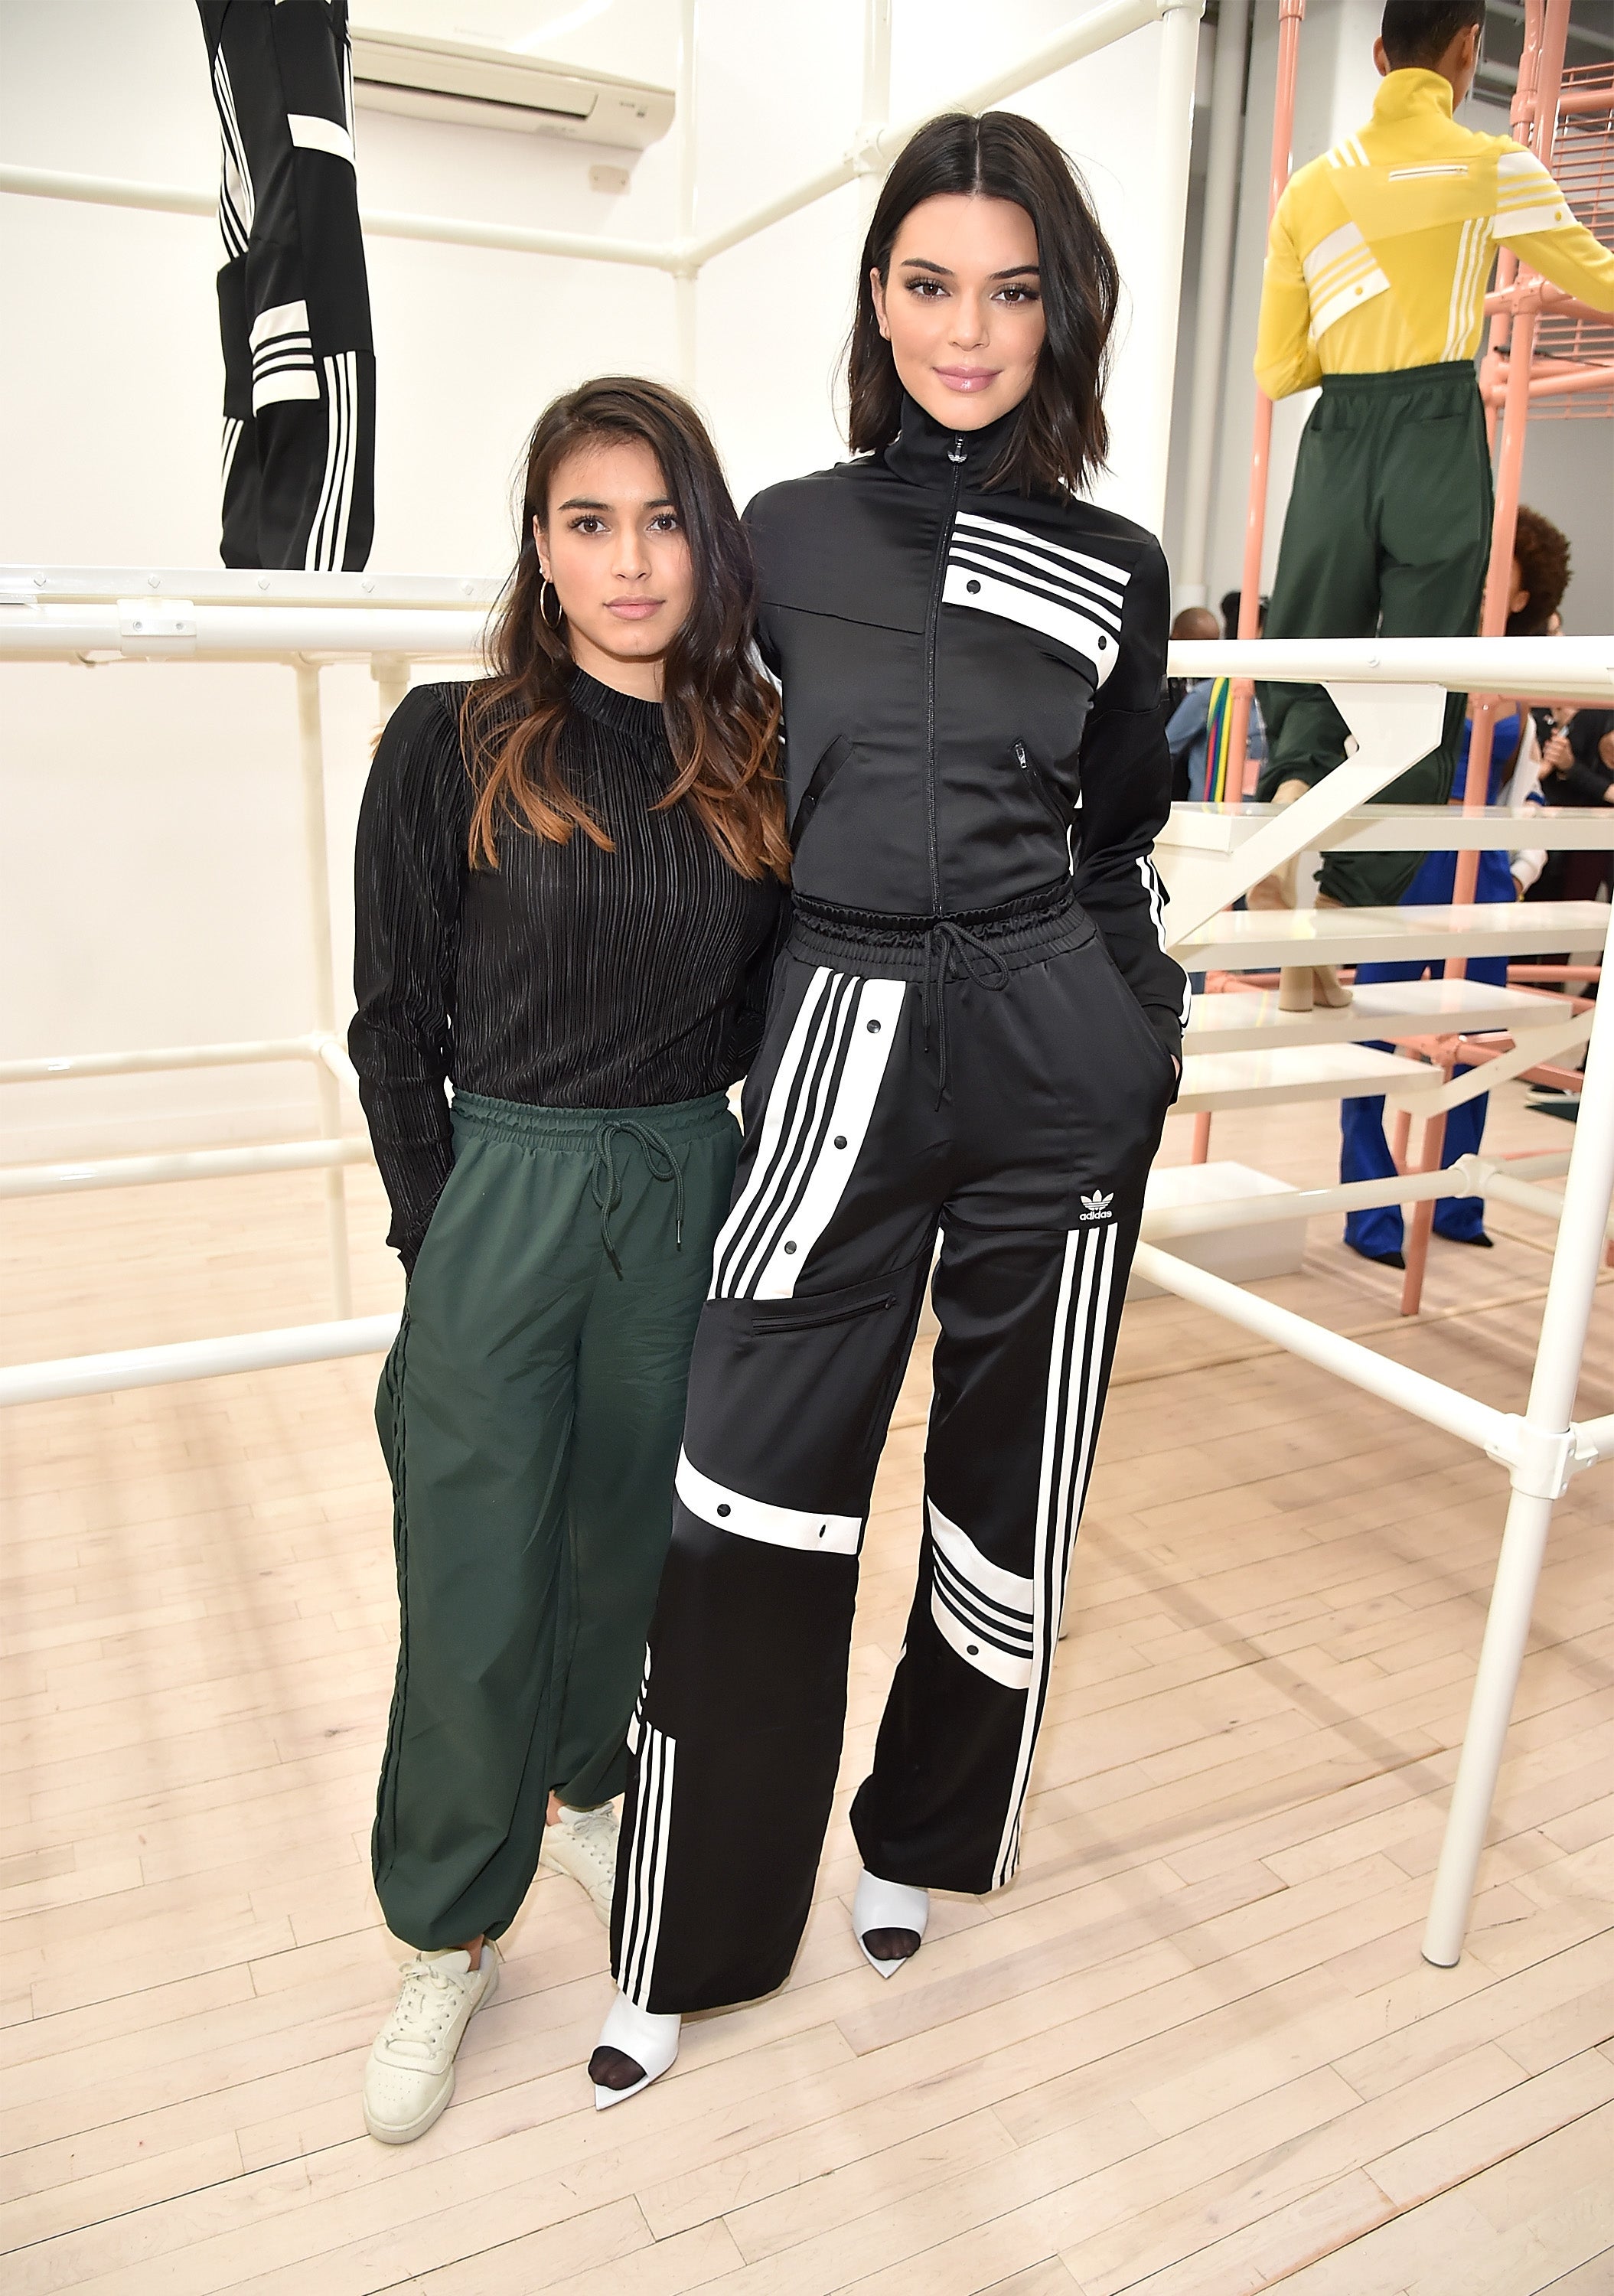 Adidas Kicks Off New York Fashion Kendall Jenner a Diverse Group of Models | Entertainment Tonight